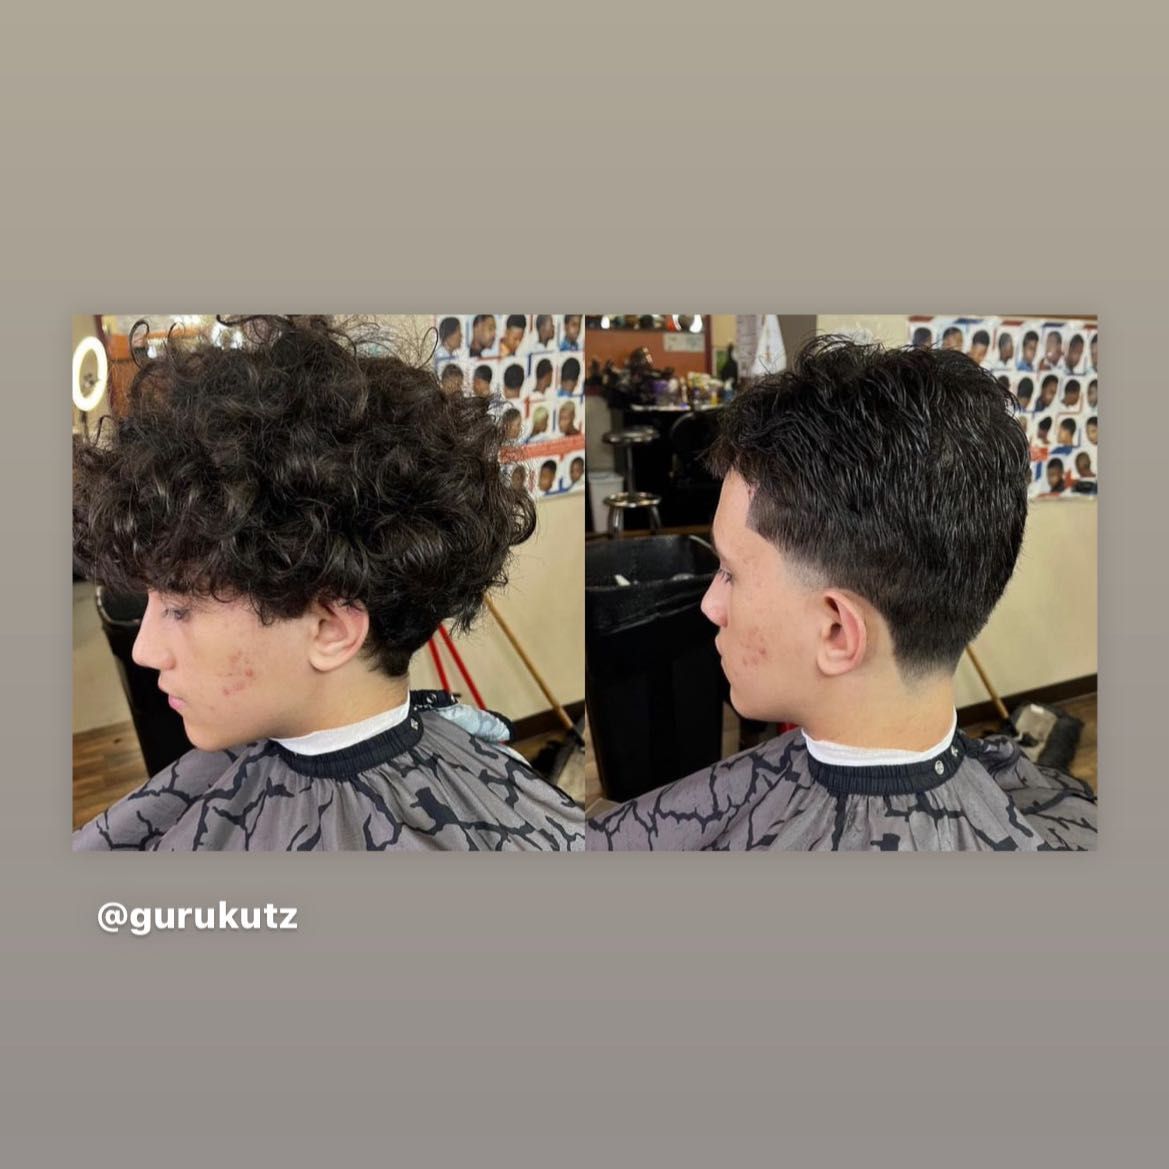 Saturday and Sunday teen haircut (13-17 years old) portfolio